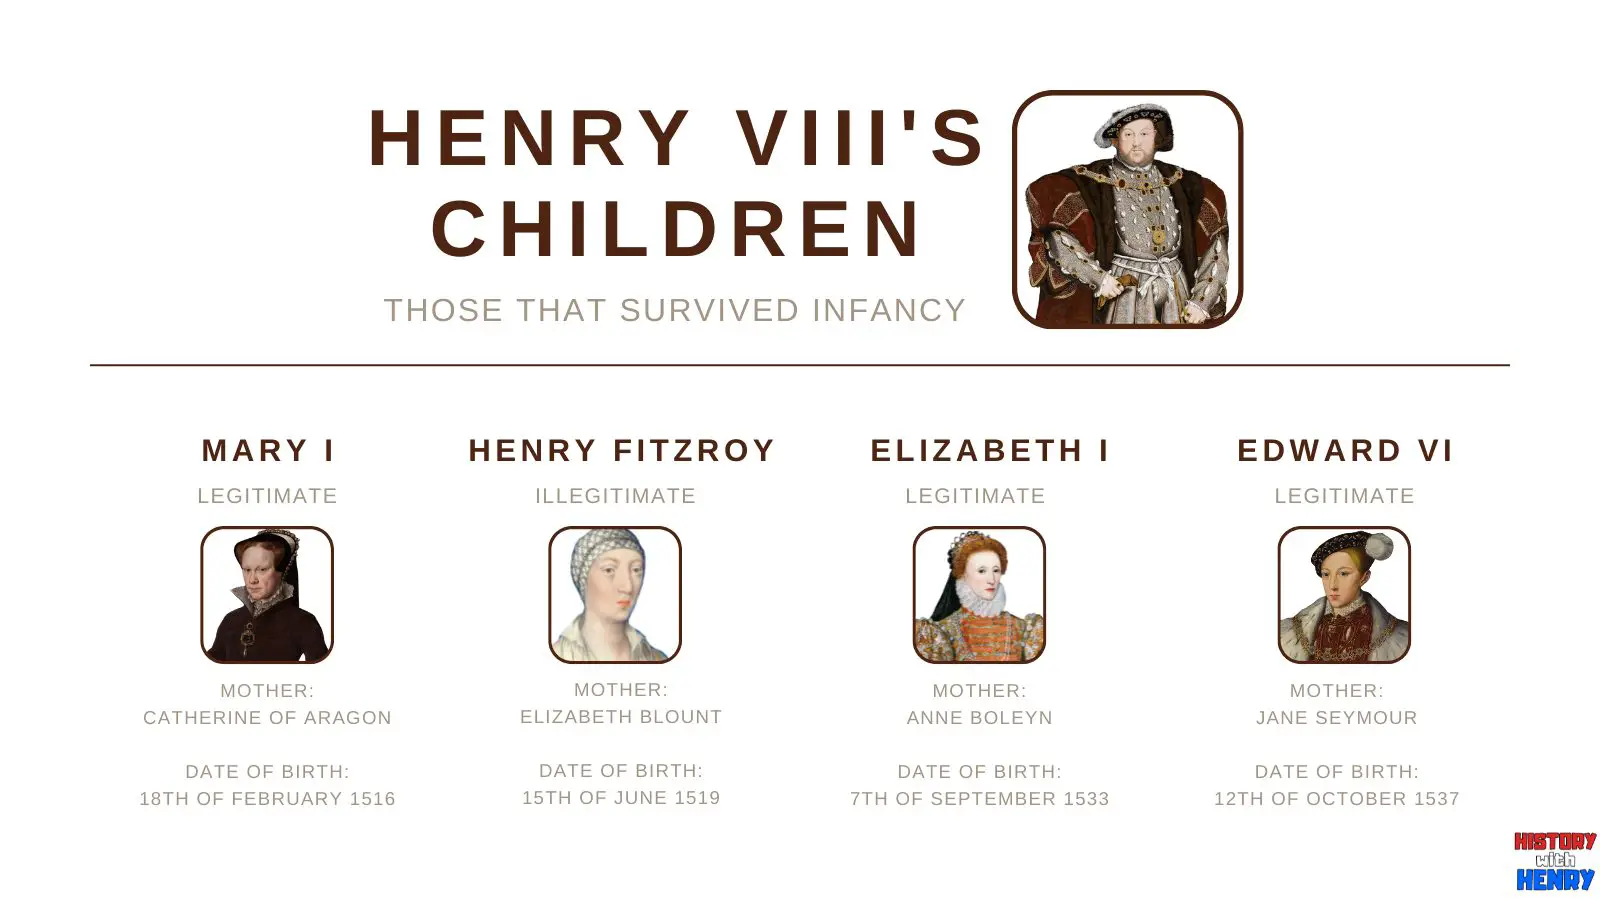 Henry VIII's Children